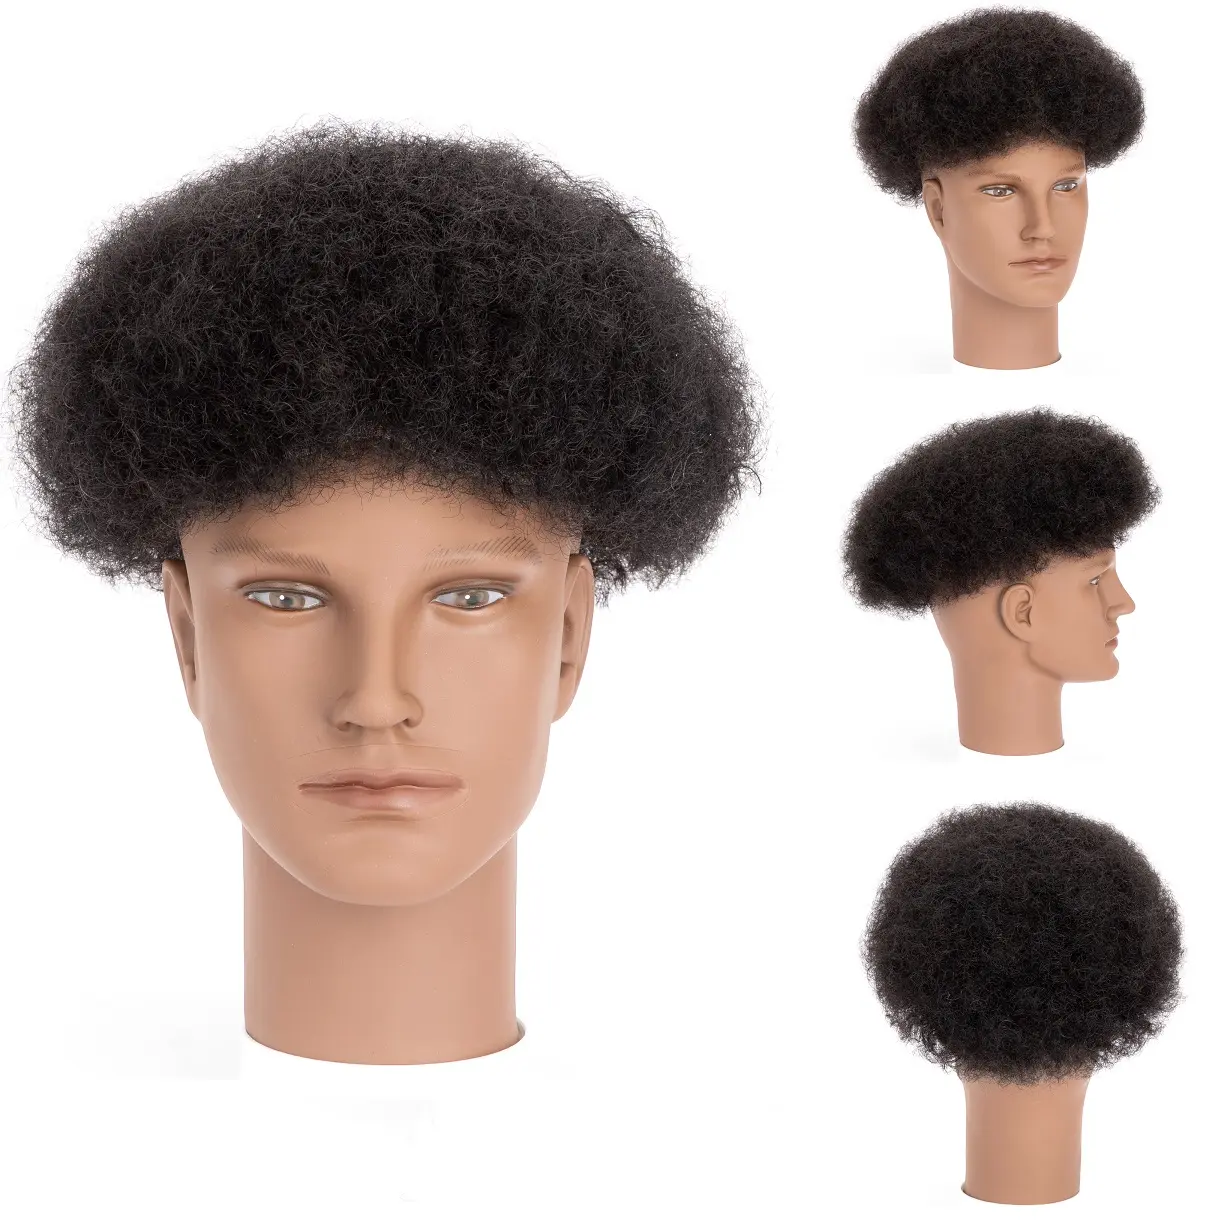 BLT Venta caliente 4mm indio cabello humano reemplazo pelucas hombres 8*10 Afro completo Mono encaje rizado onda pelo tupés para hombres negros